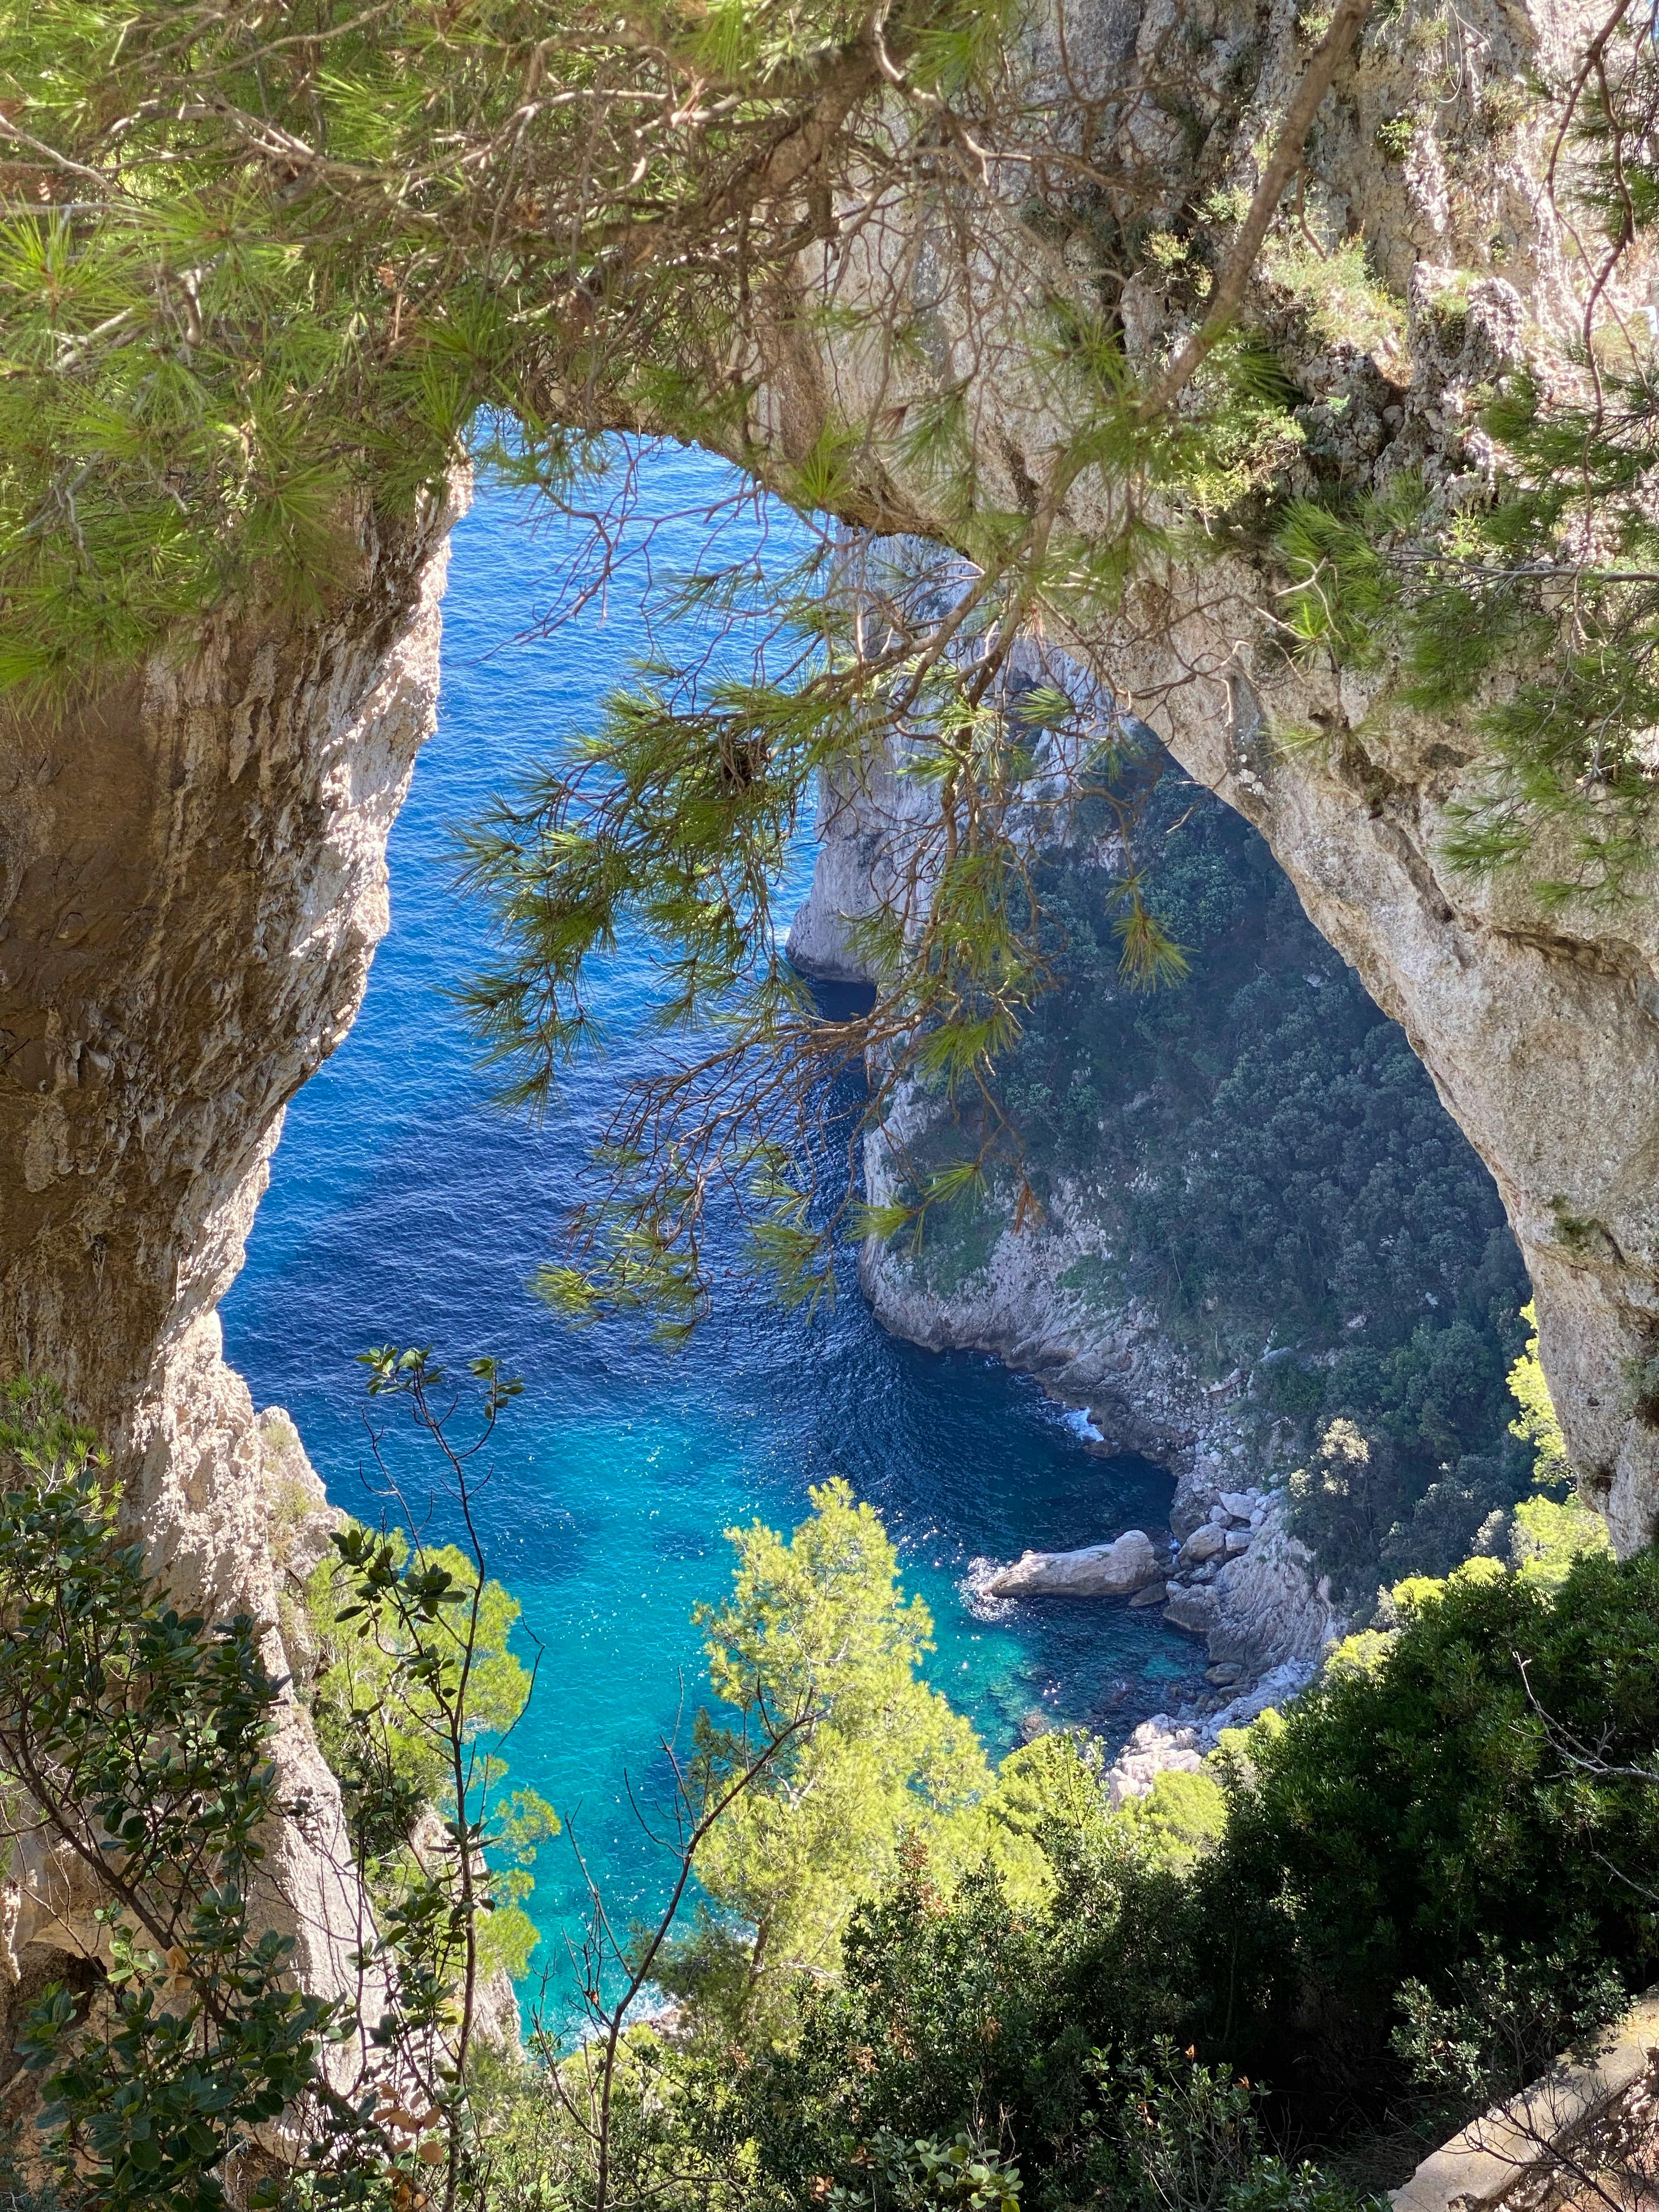 Arco Naturale, Natural Arch on Coast of Capri Island, Italy Stock